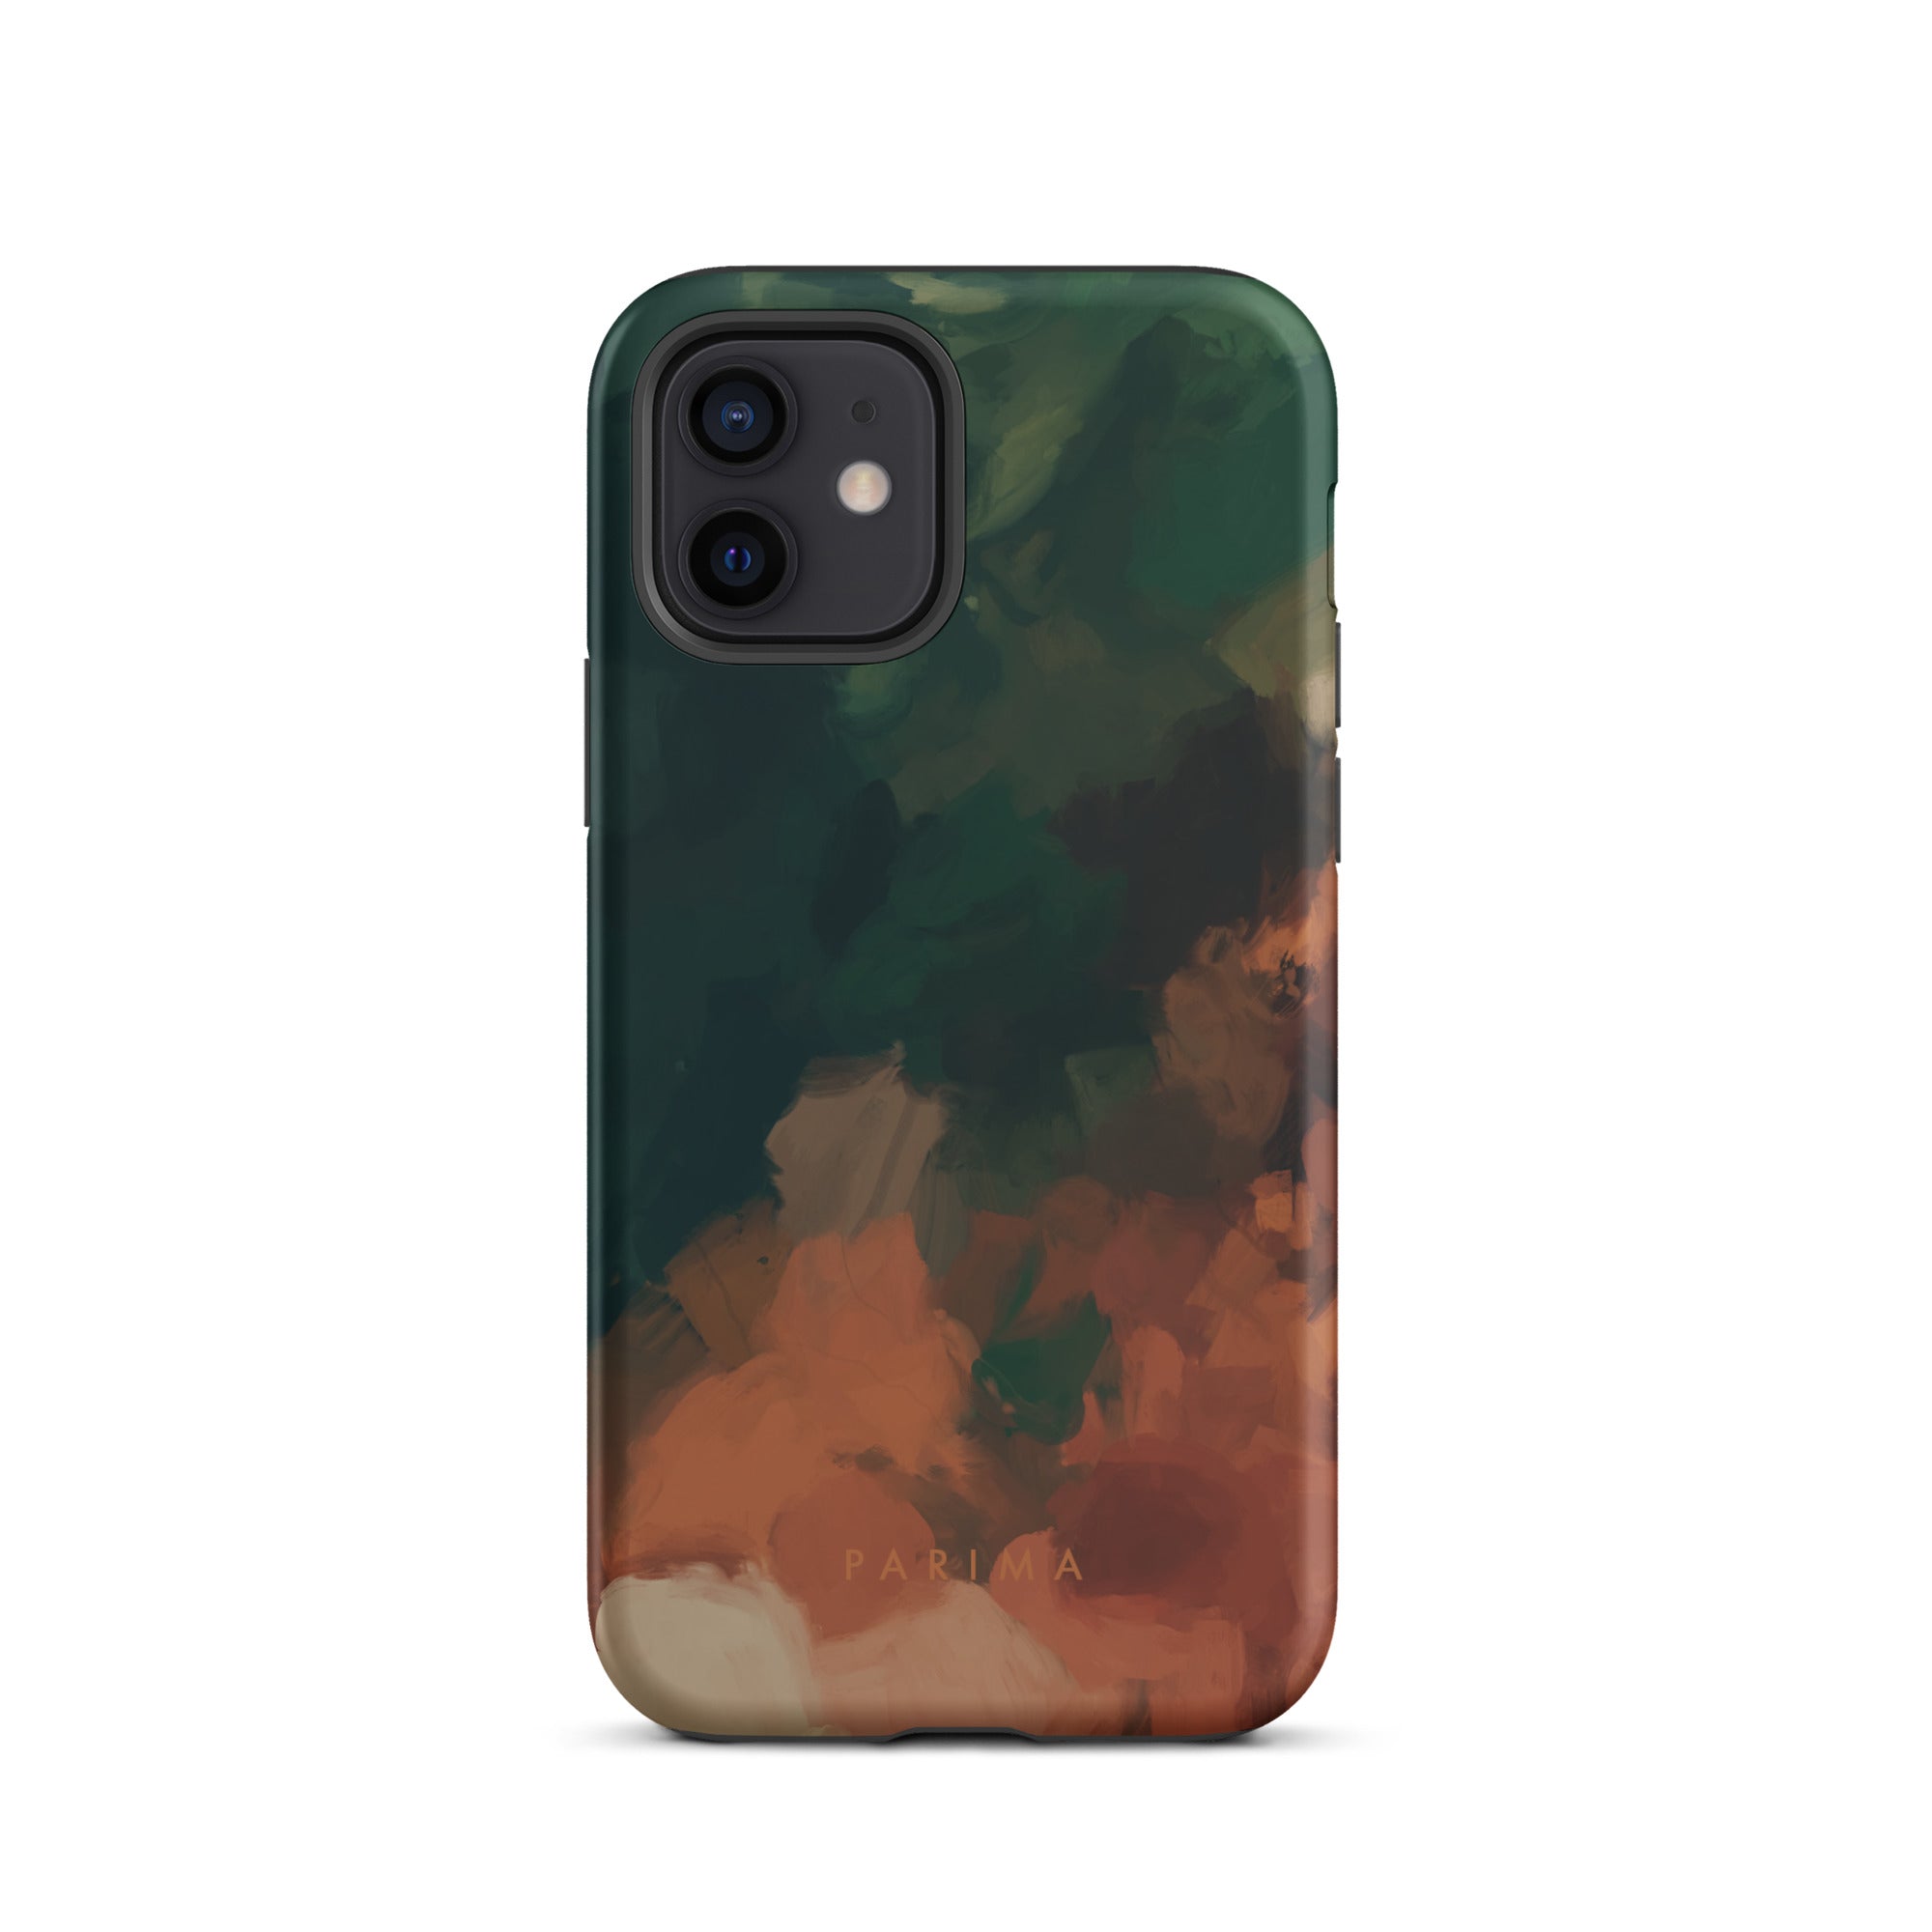 Cedar, green and brown abstract art - iPhone 12 tough case by Parima Studio